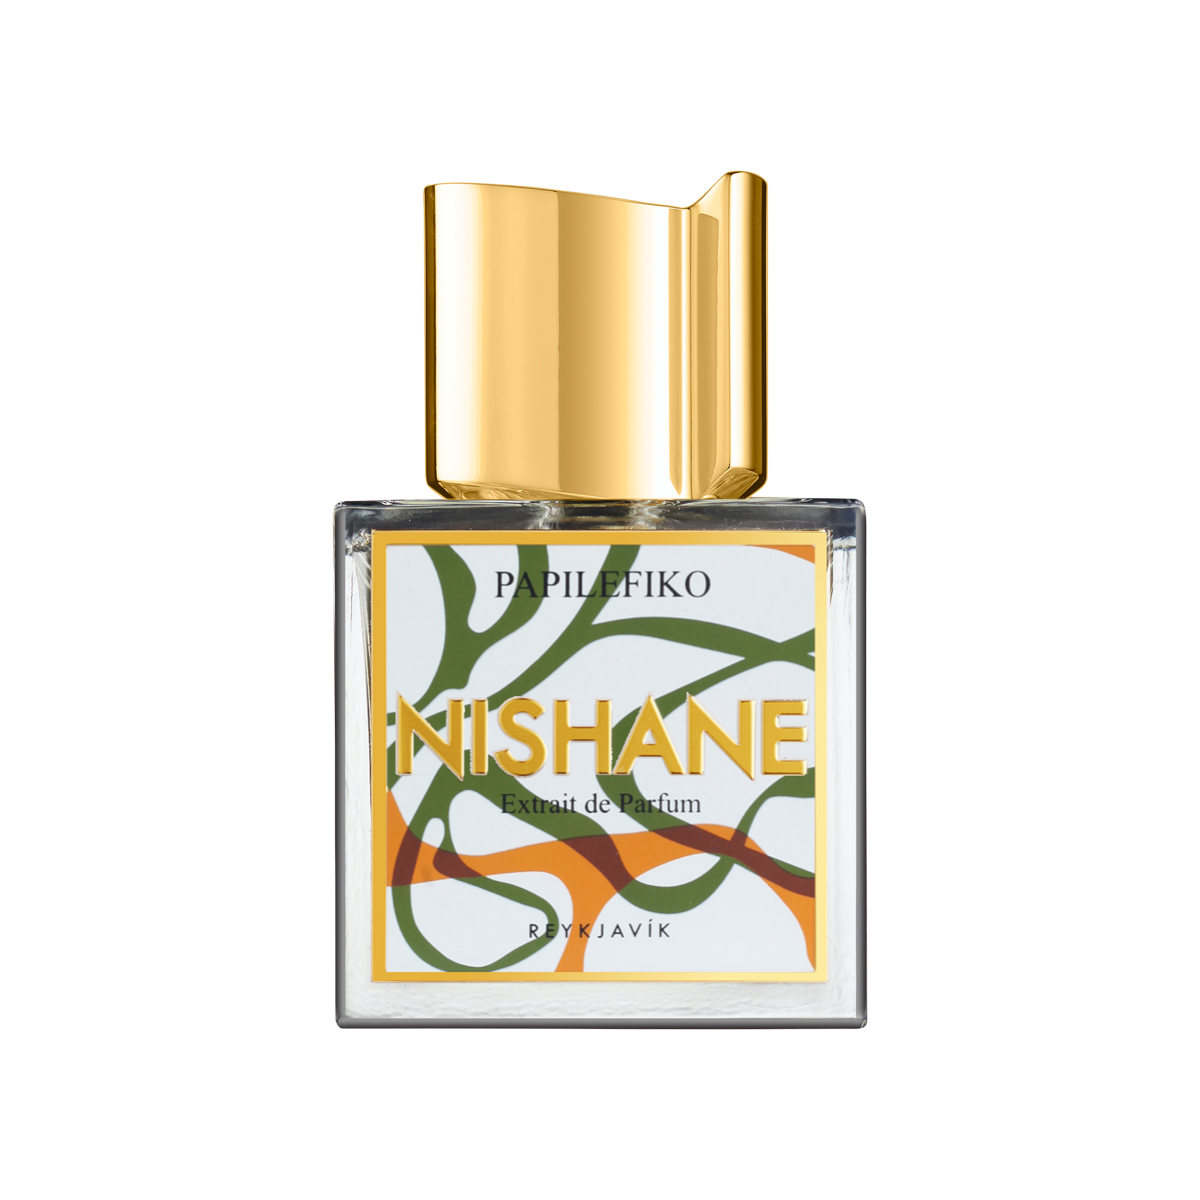 Nishane - Papilefiko Extrait de Parfum